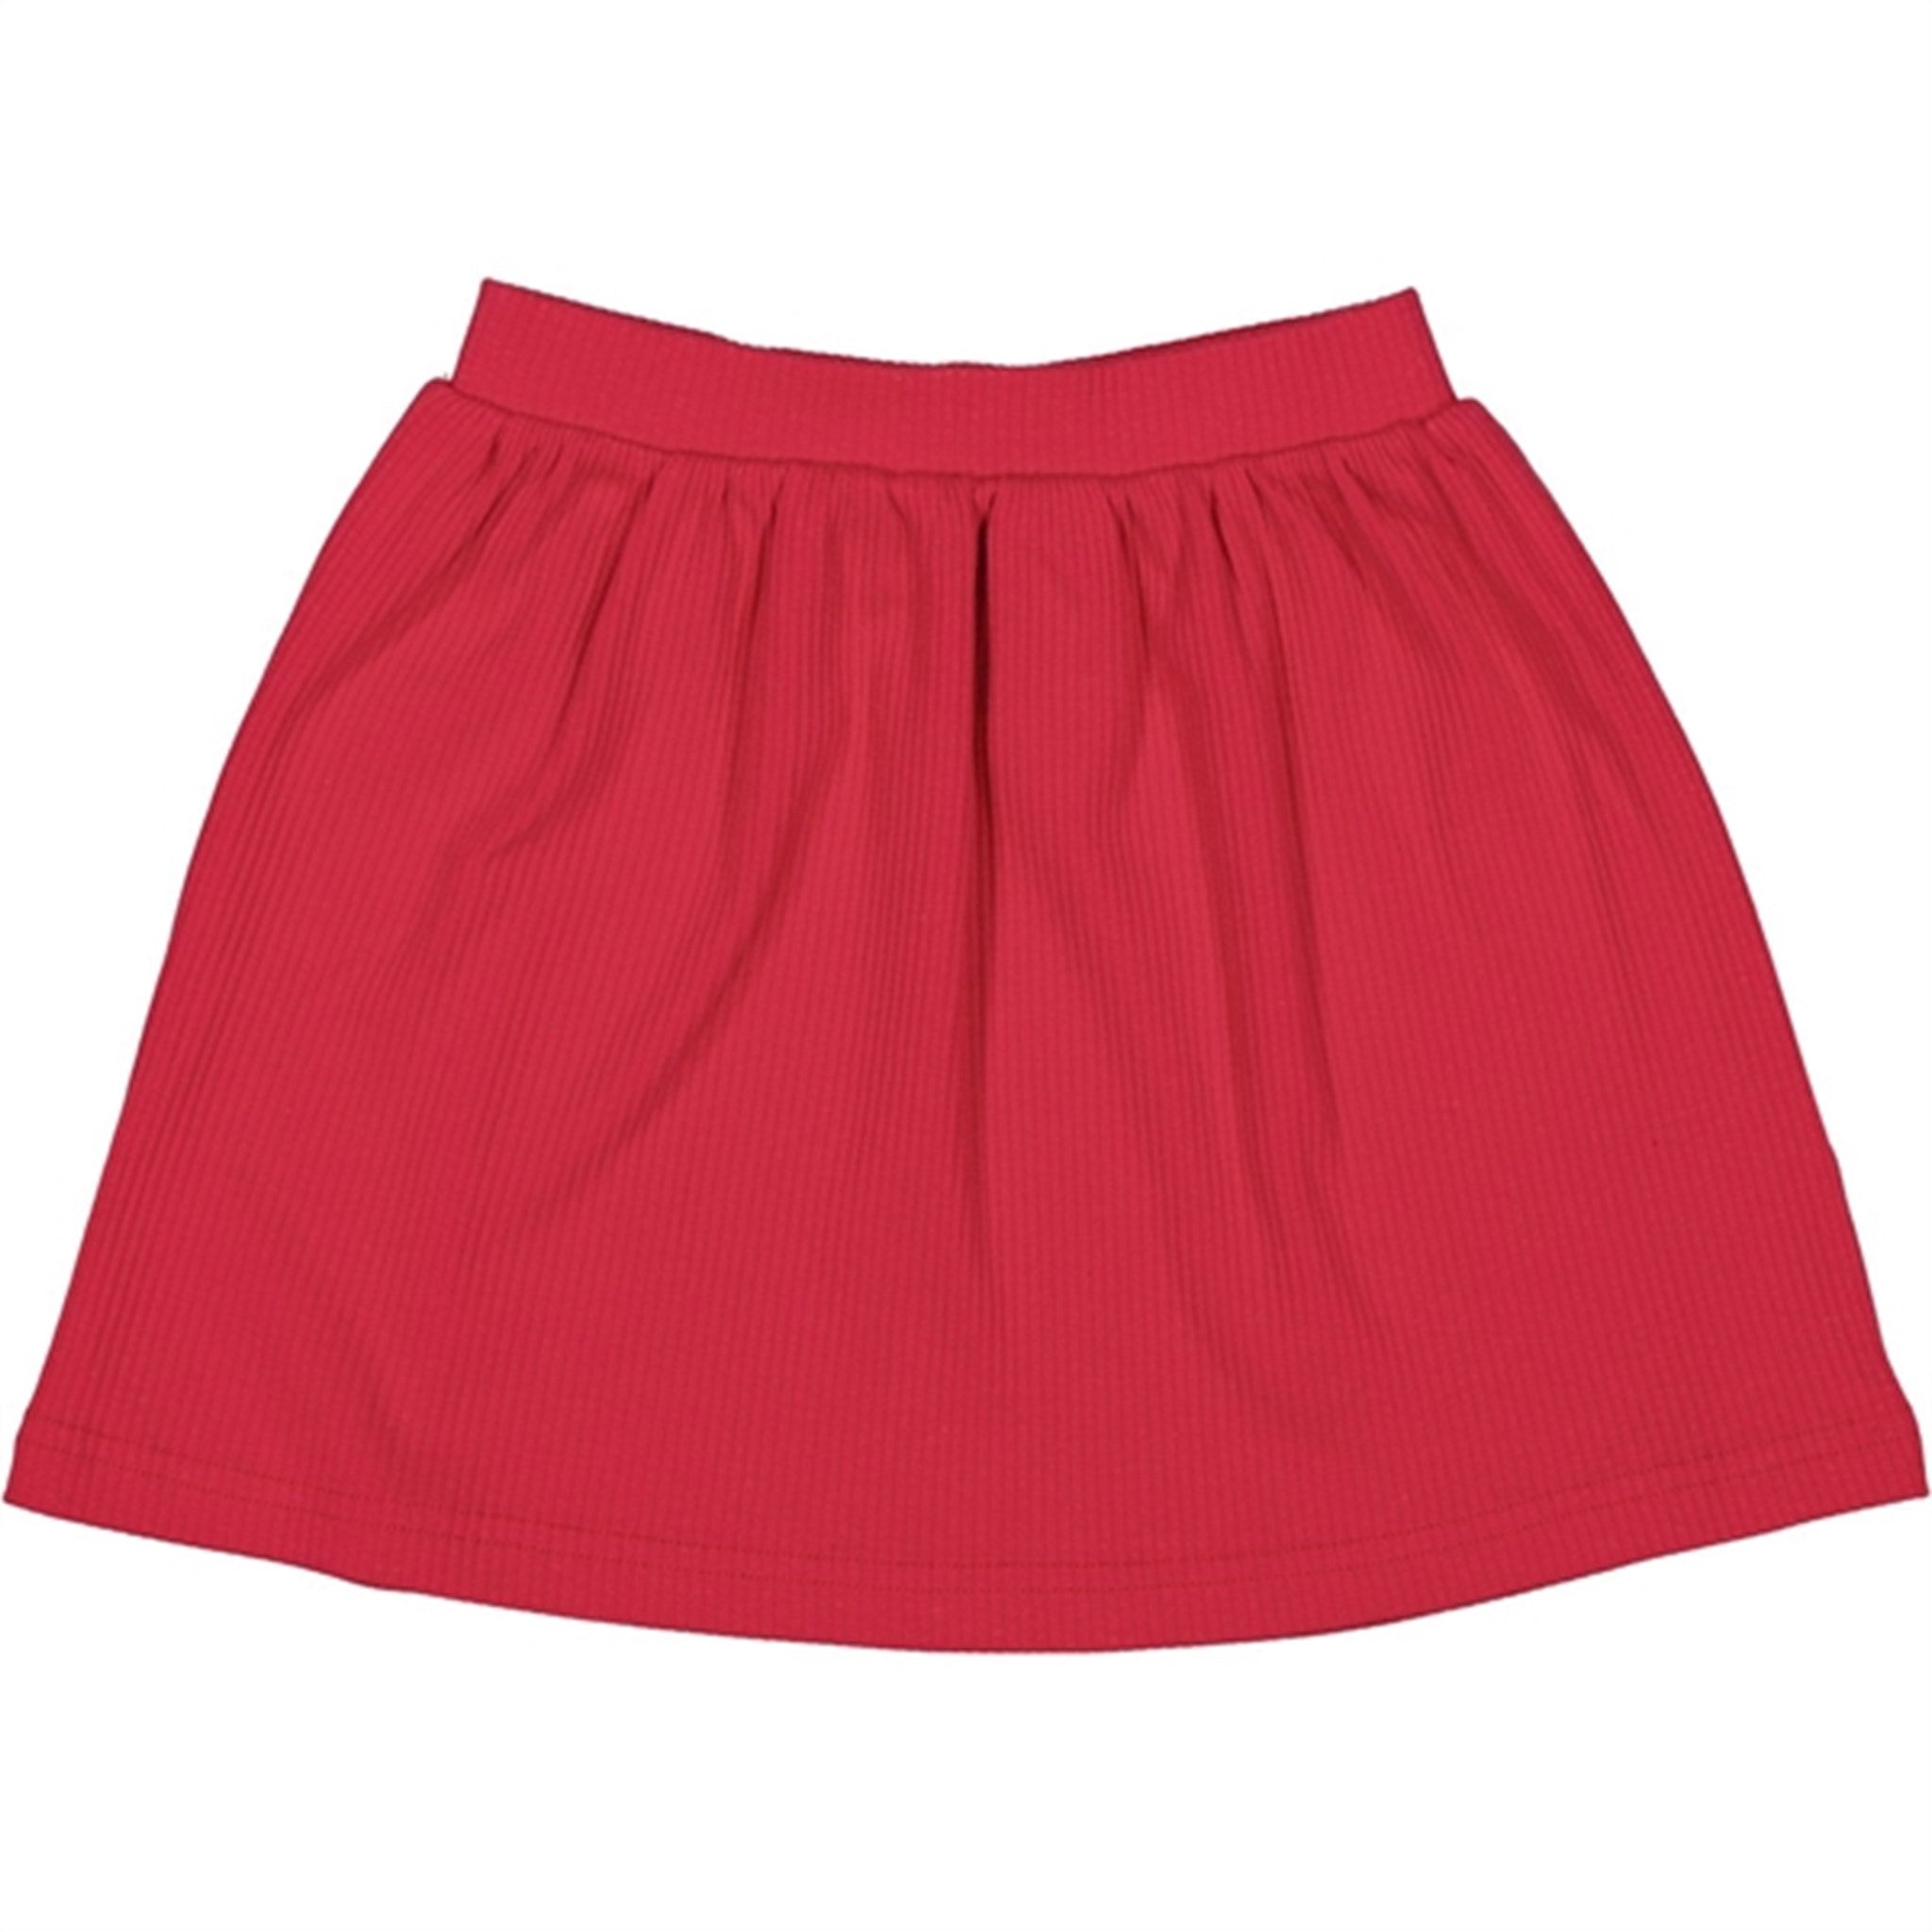 MarMar Modal Red Currant Nederdel